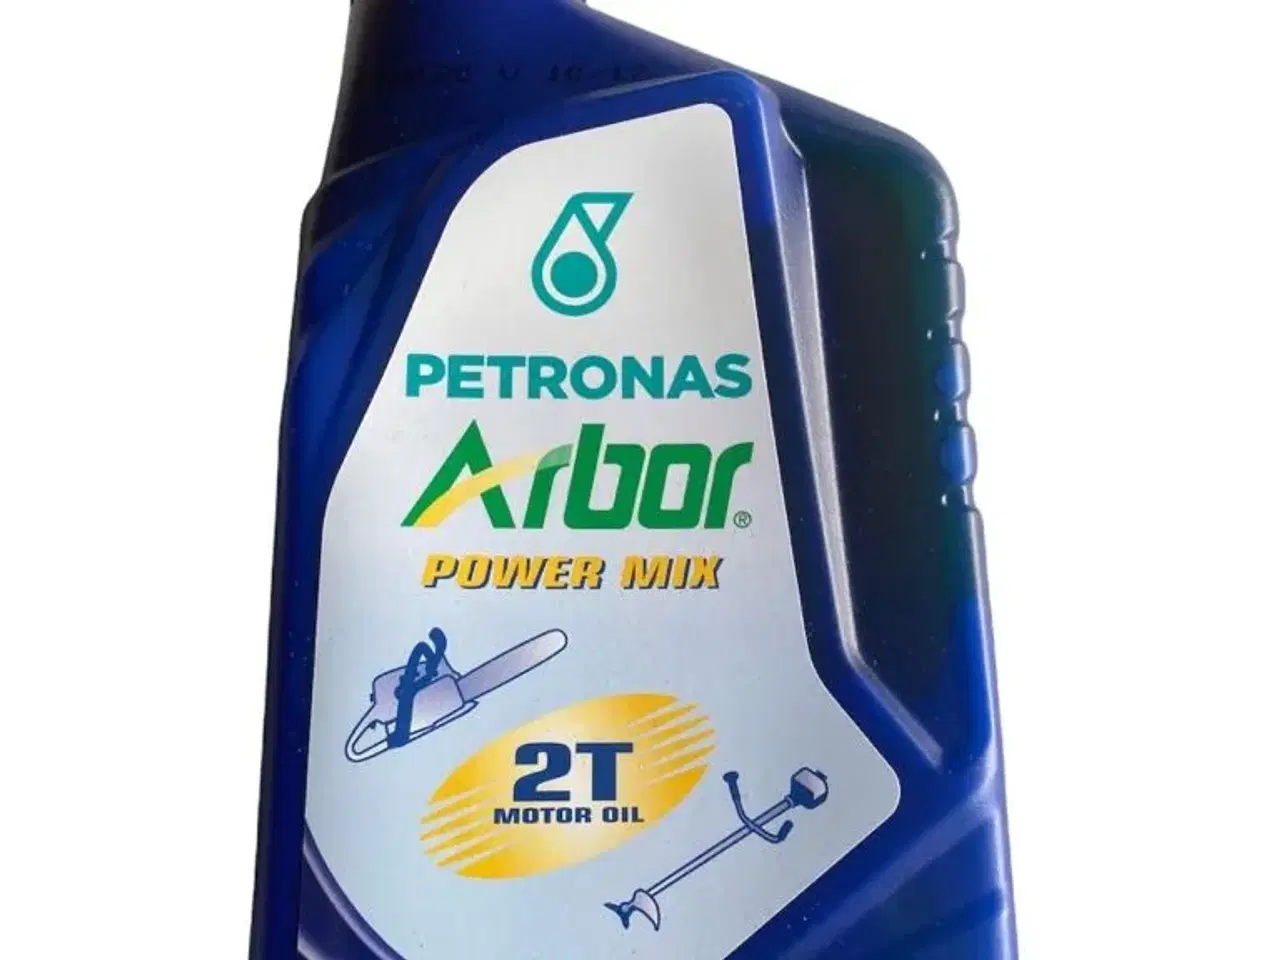 Billede 1 - Petronas arbor power mix